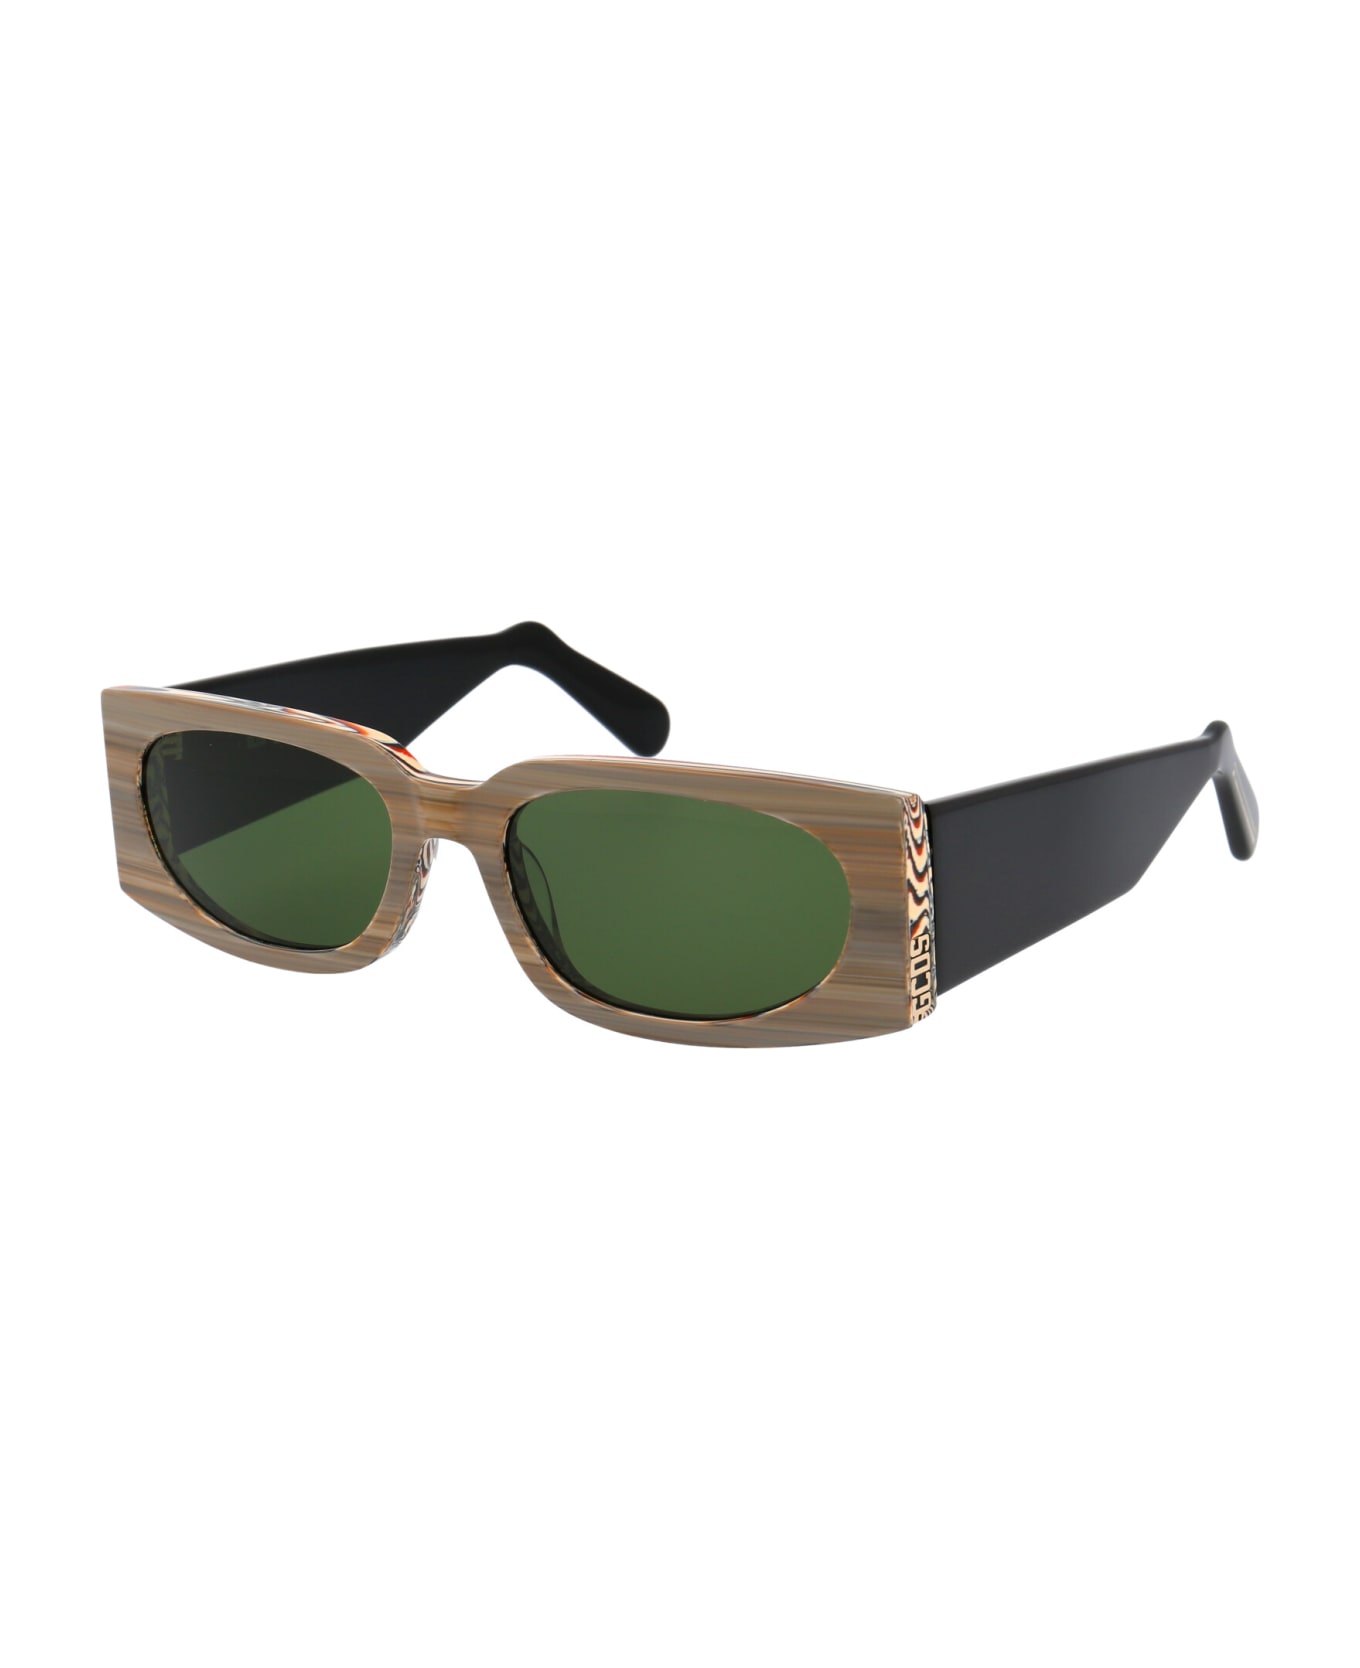 GCDS Gd0016 Sunglasses - 60N BROWN